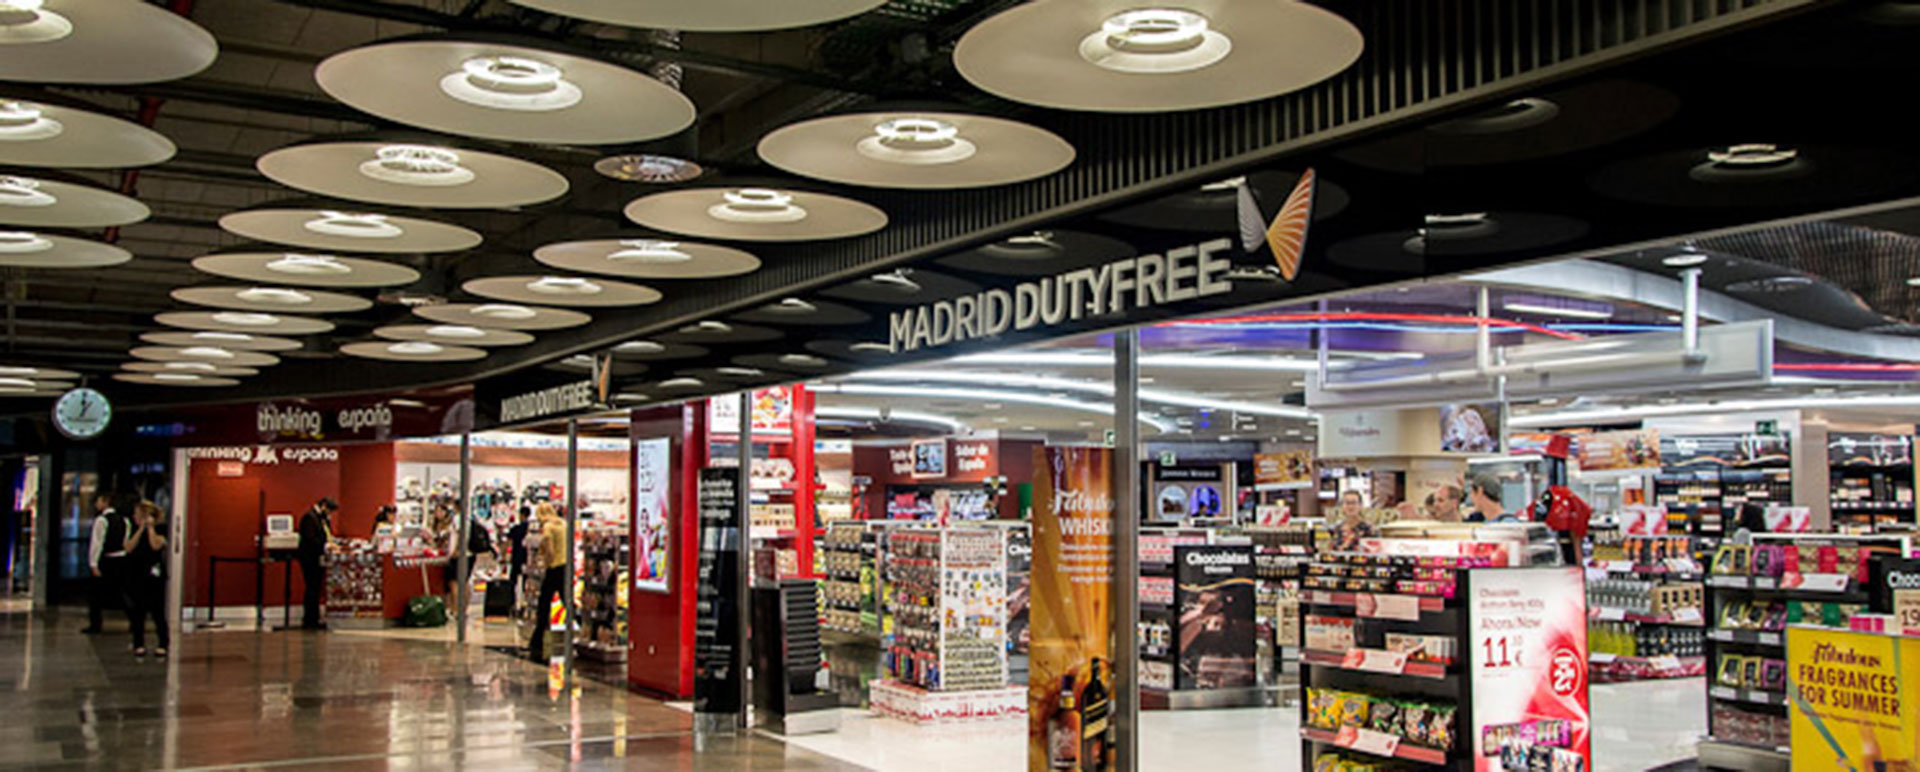 Shops at Madrid airport